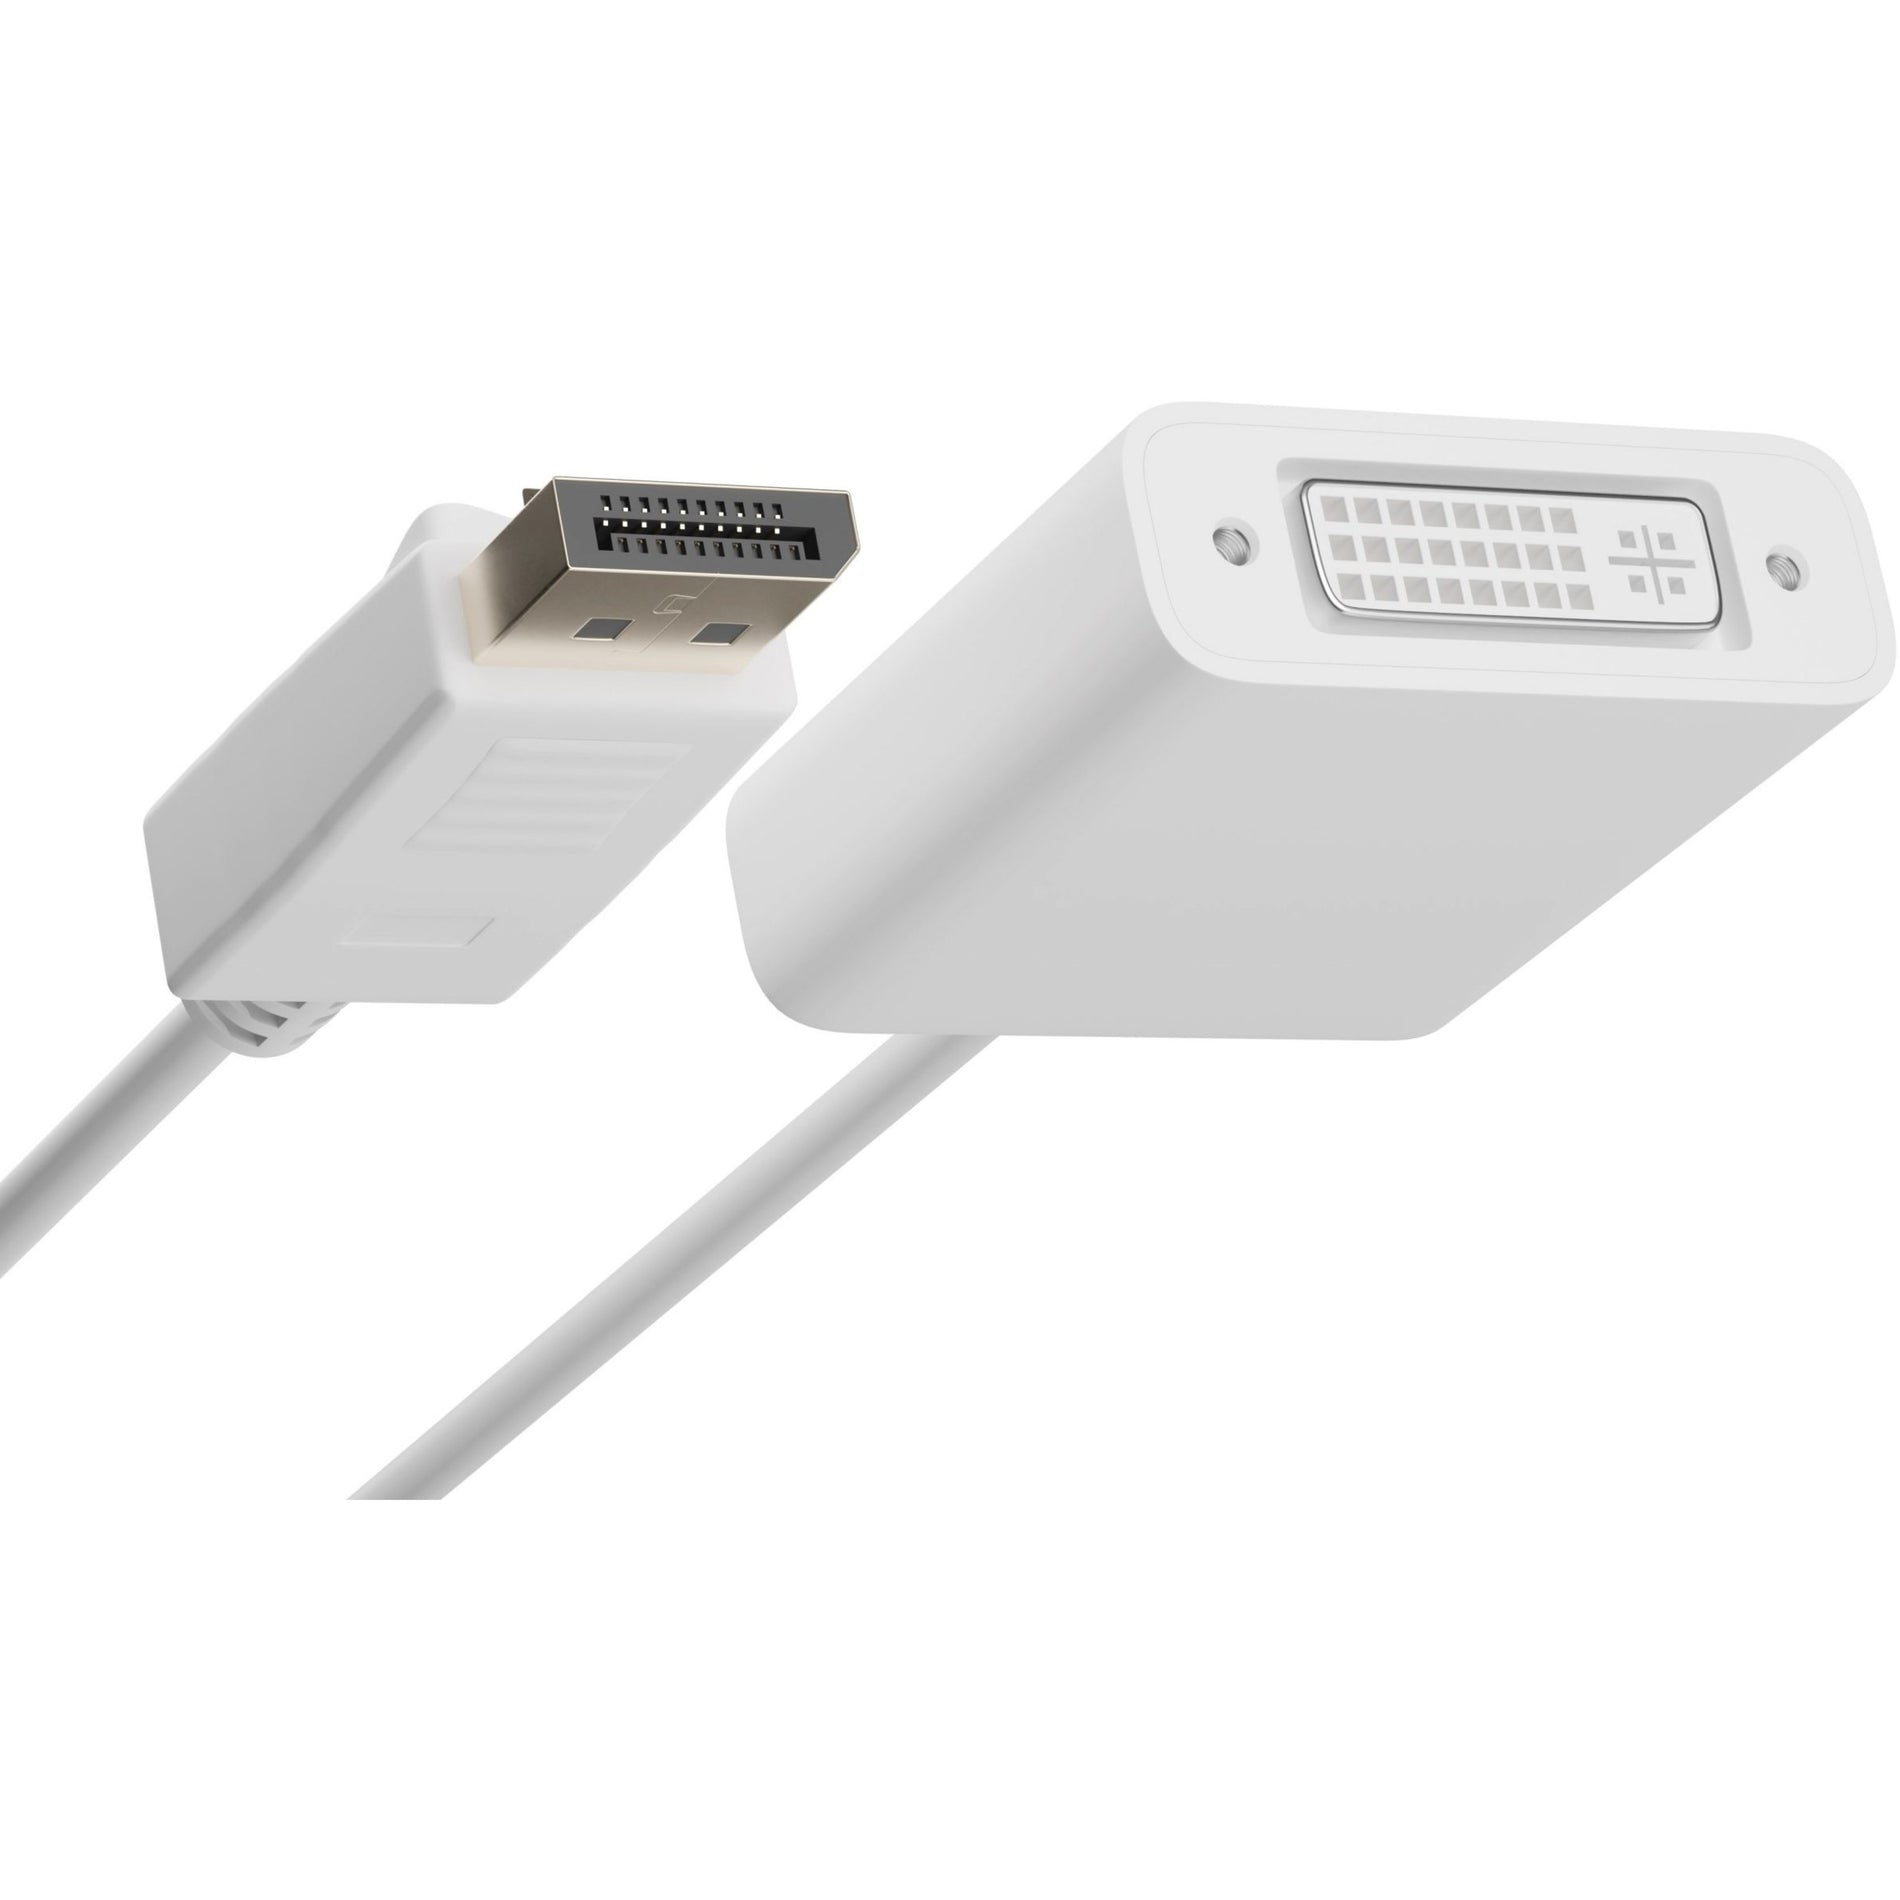 Unirise DPDVI-ADPT DisplayPort Male to DVI-I Dual Link (24+5) Female Adapter, Video Cable